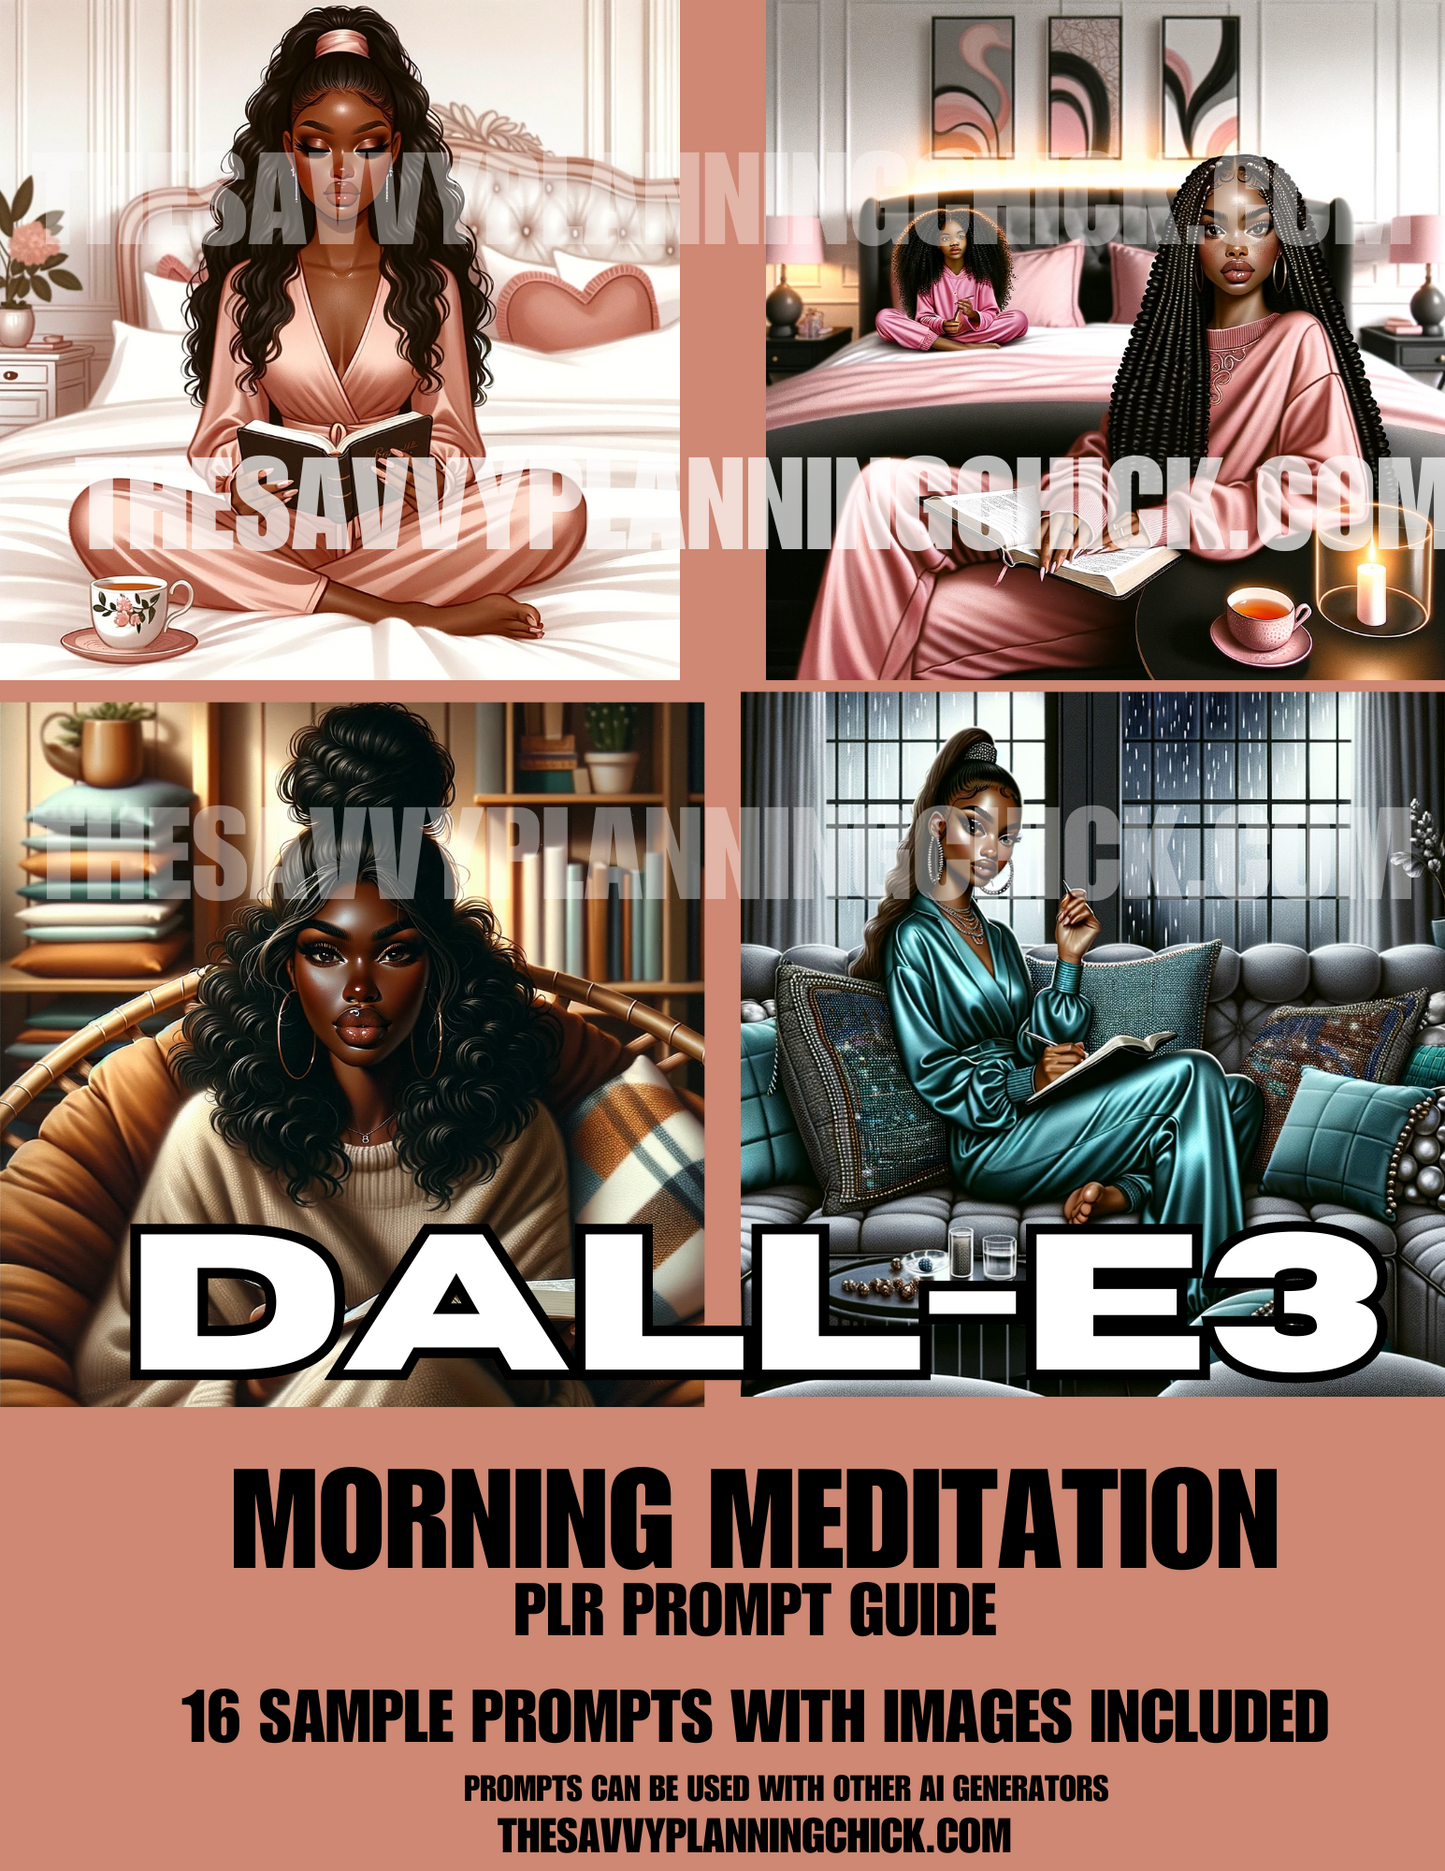 DALL-E3 MORNING MEDITATION PLR PROMPT GUIDE